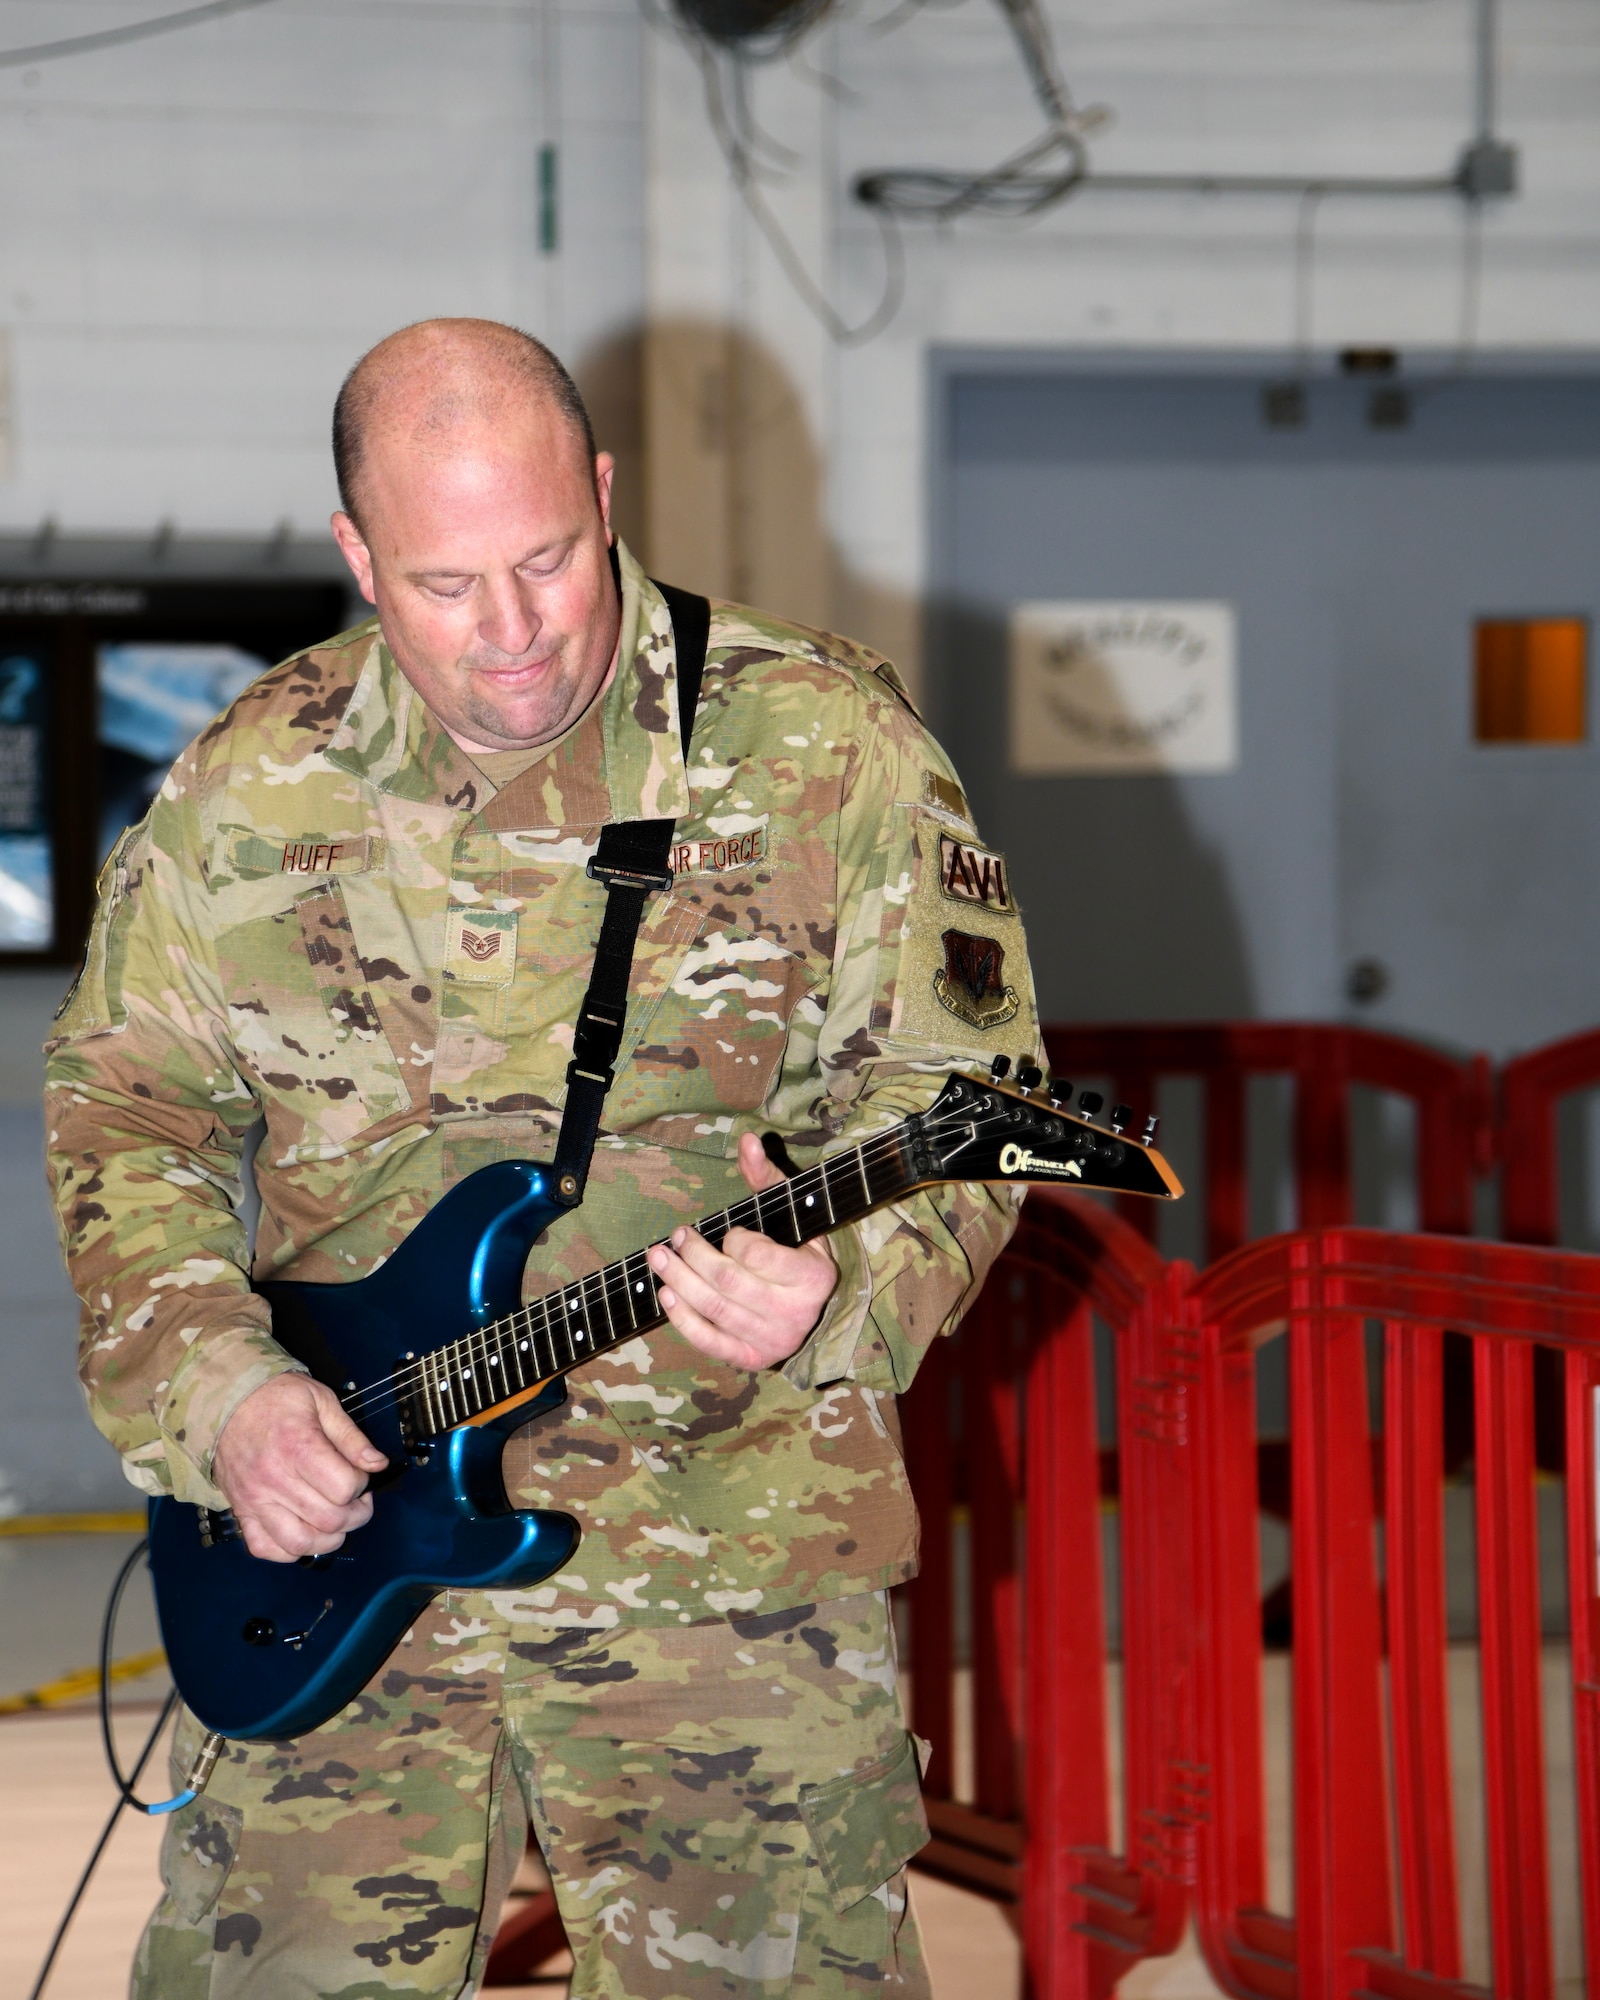 A photo of Tech. Sgt. Mark Huff, 177th Maintenance Squadron avionics technician, plays the U.S. national anthem on electric guitar.